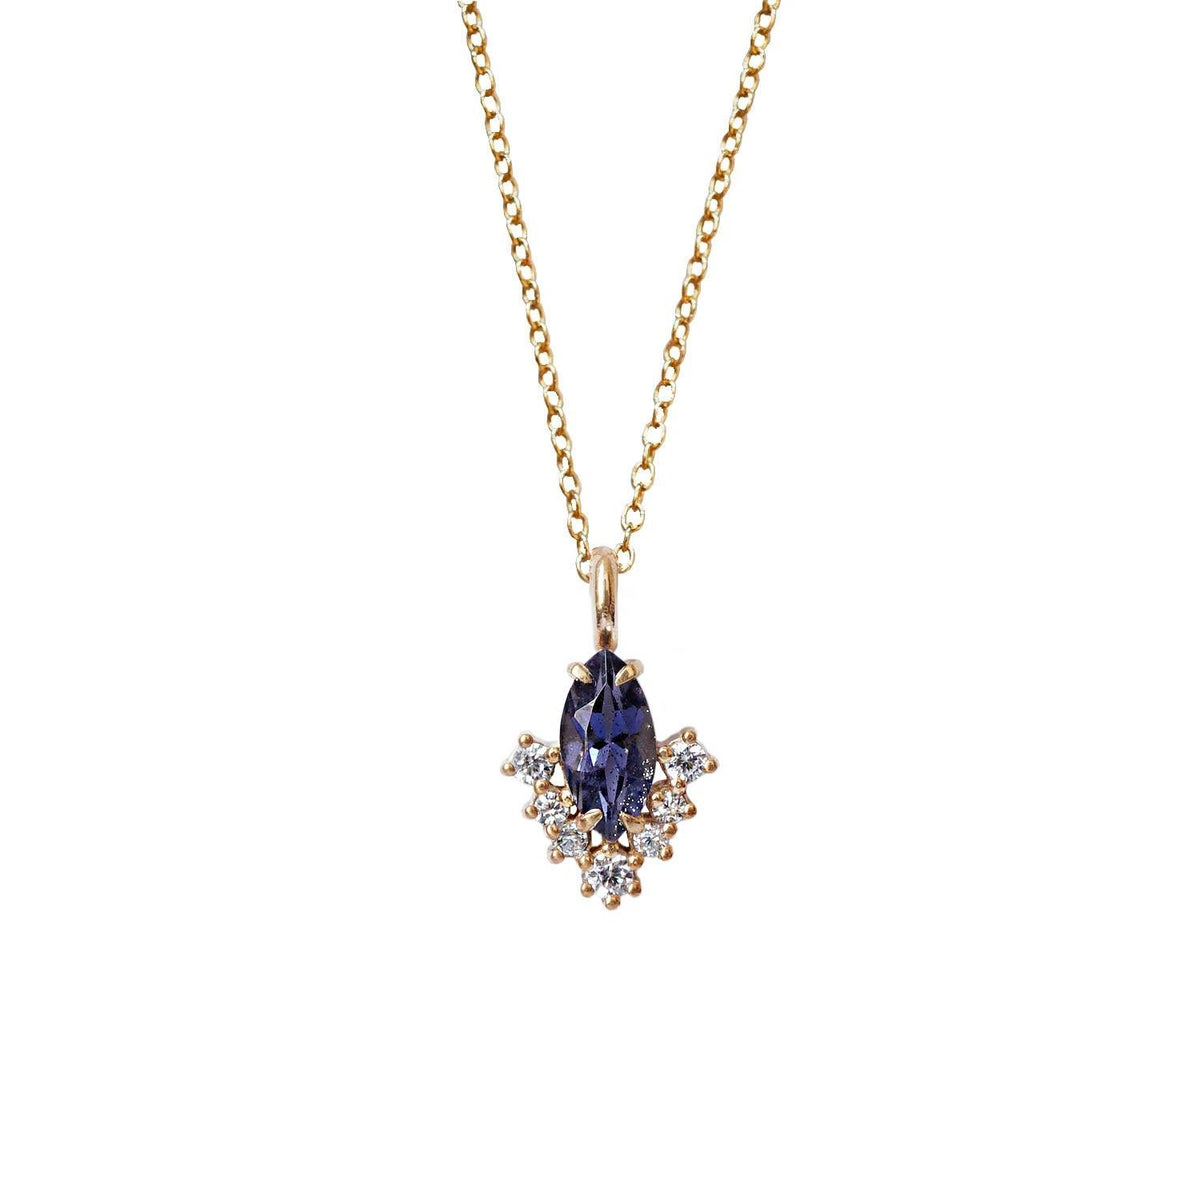 Poison Ivy Iolite Necklace - Tippy Taste Jewelry